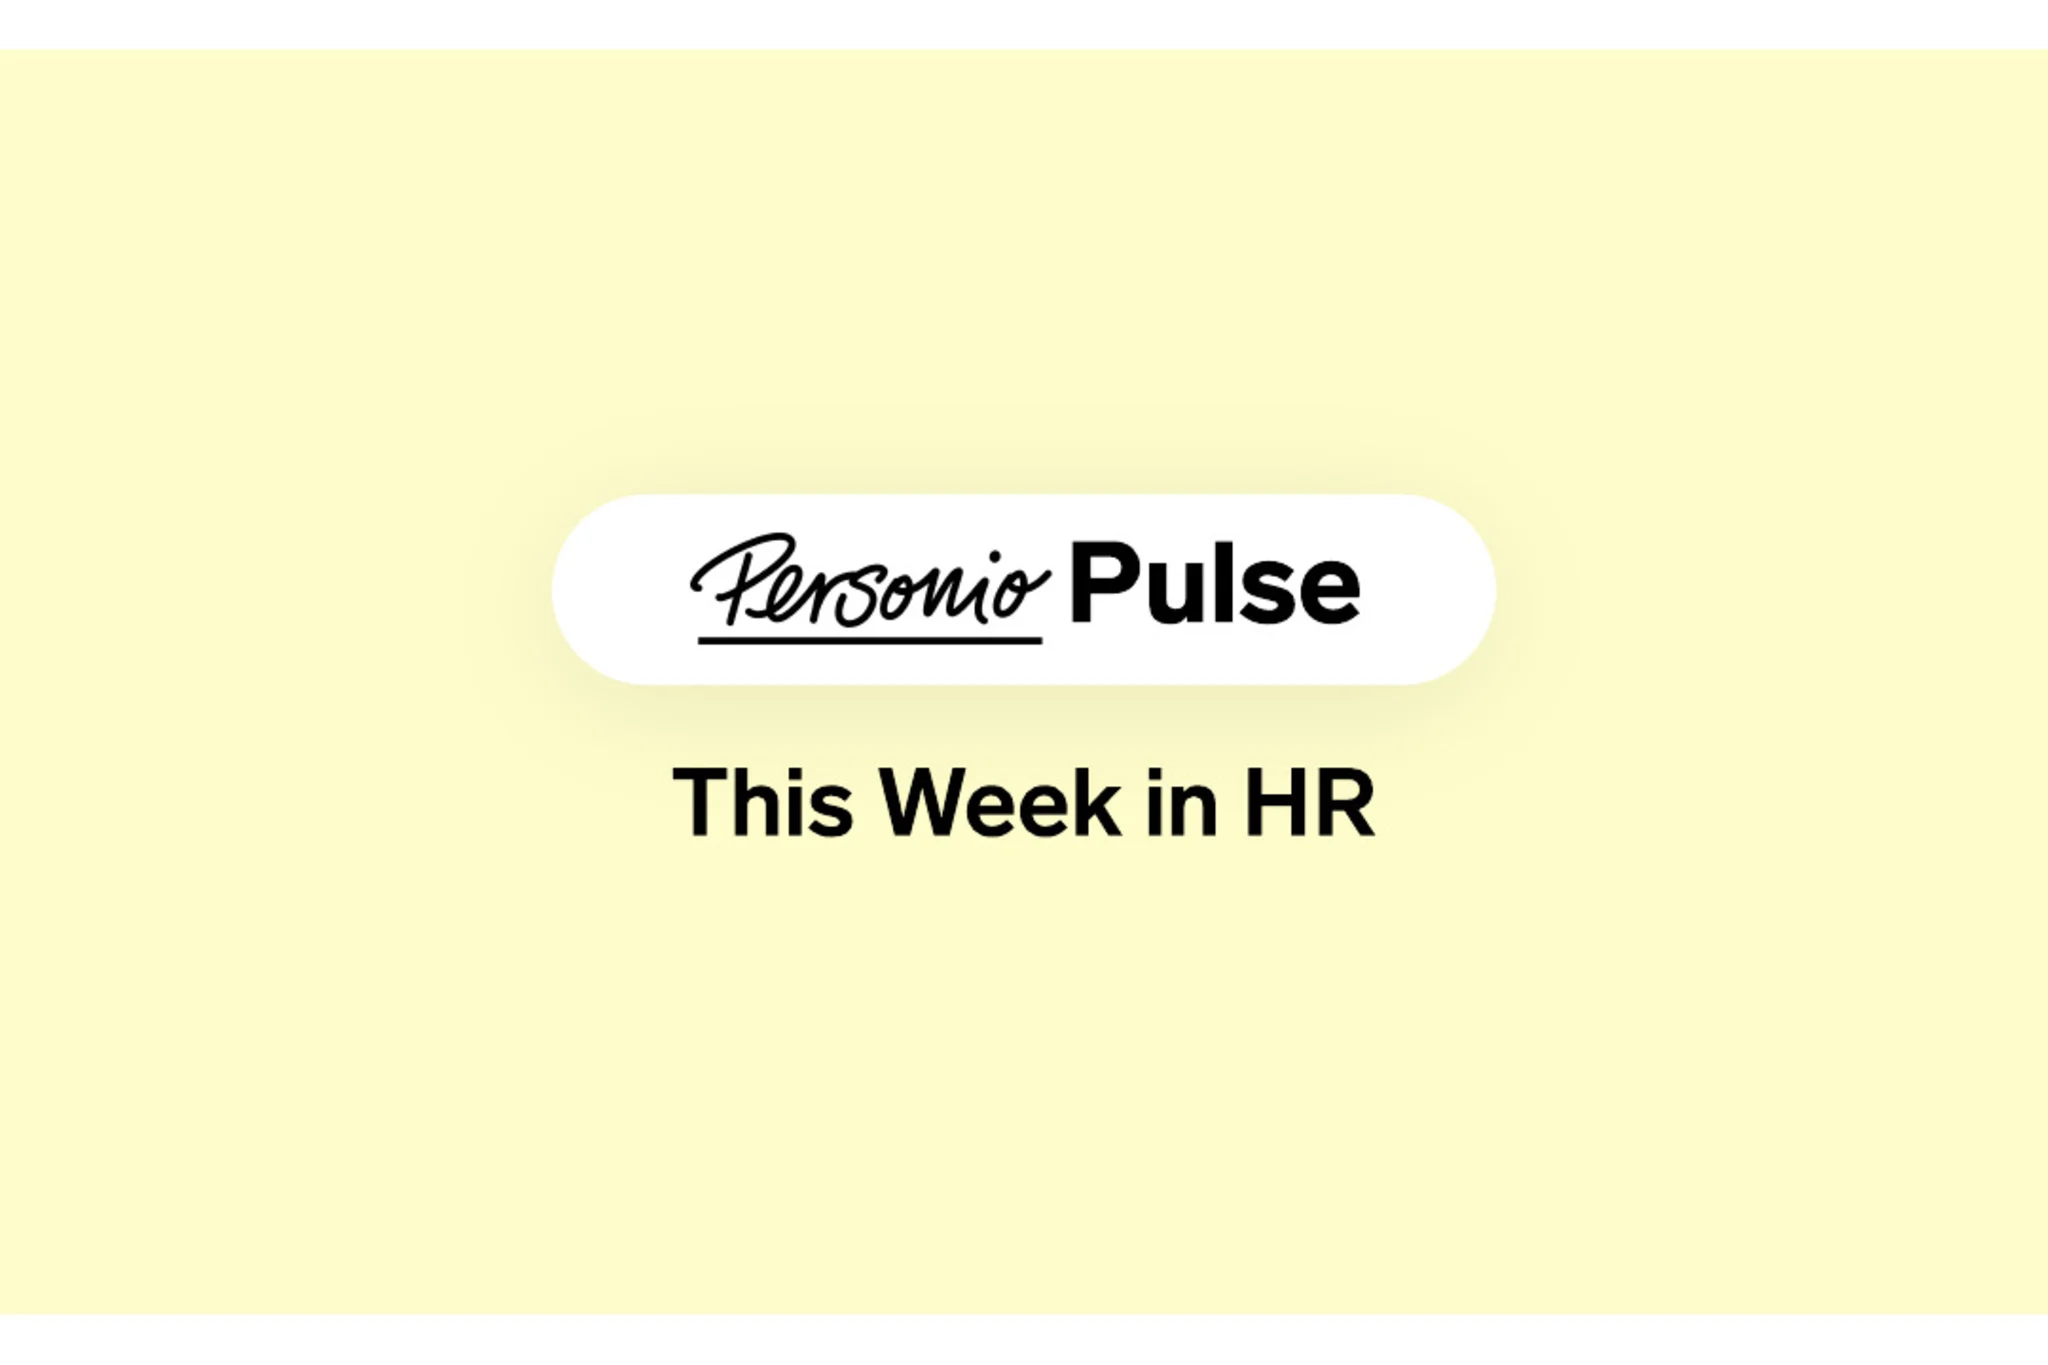 Personio Pulse: This Week in HR - 2